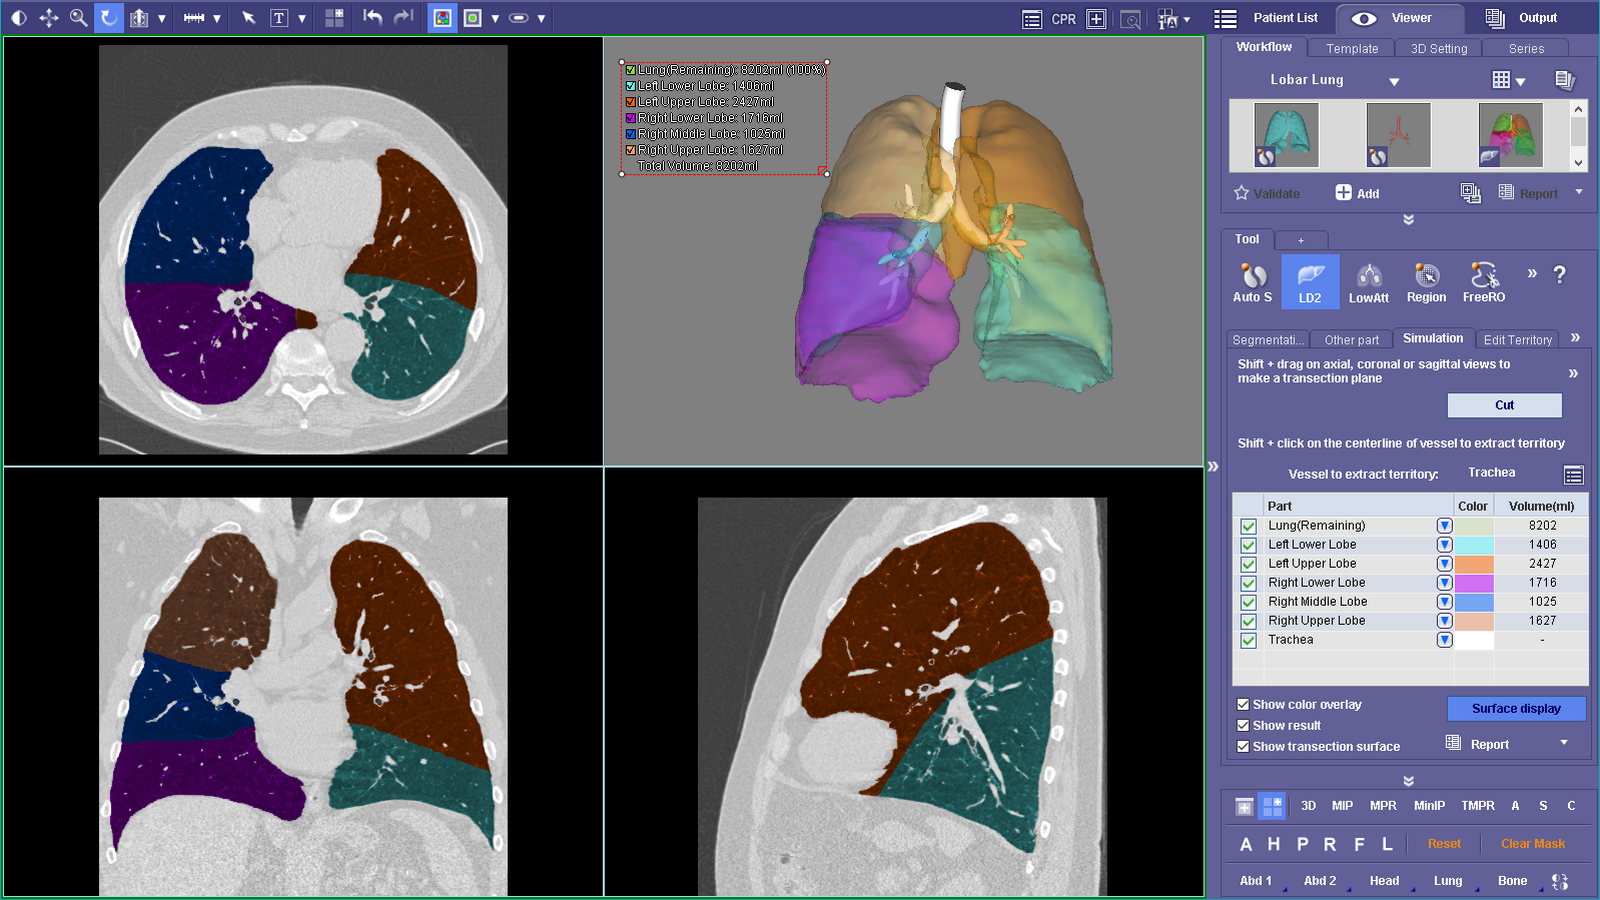 Lung Lobe and Lesion Segmentation Volumes